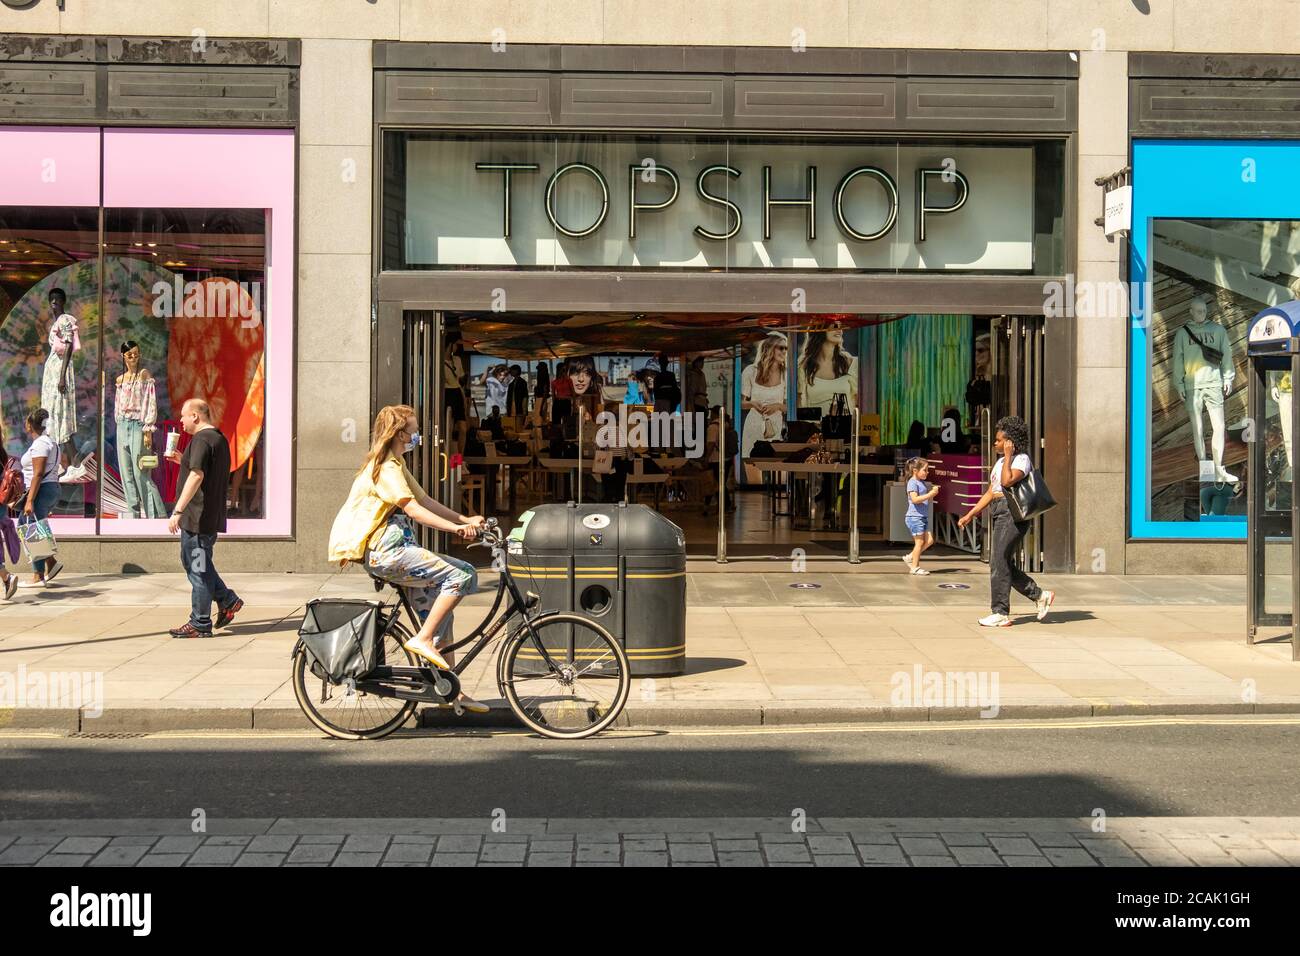 Topshop store on Oxfortd Street, British fast fashion brand Stock Photo